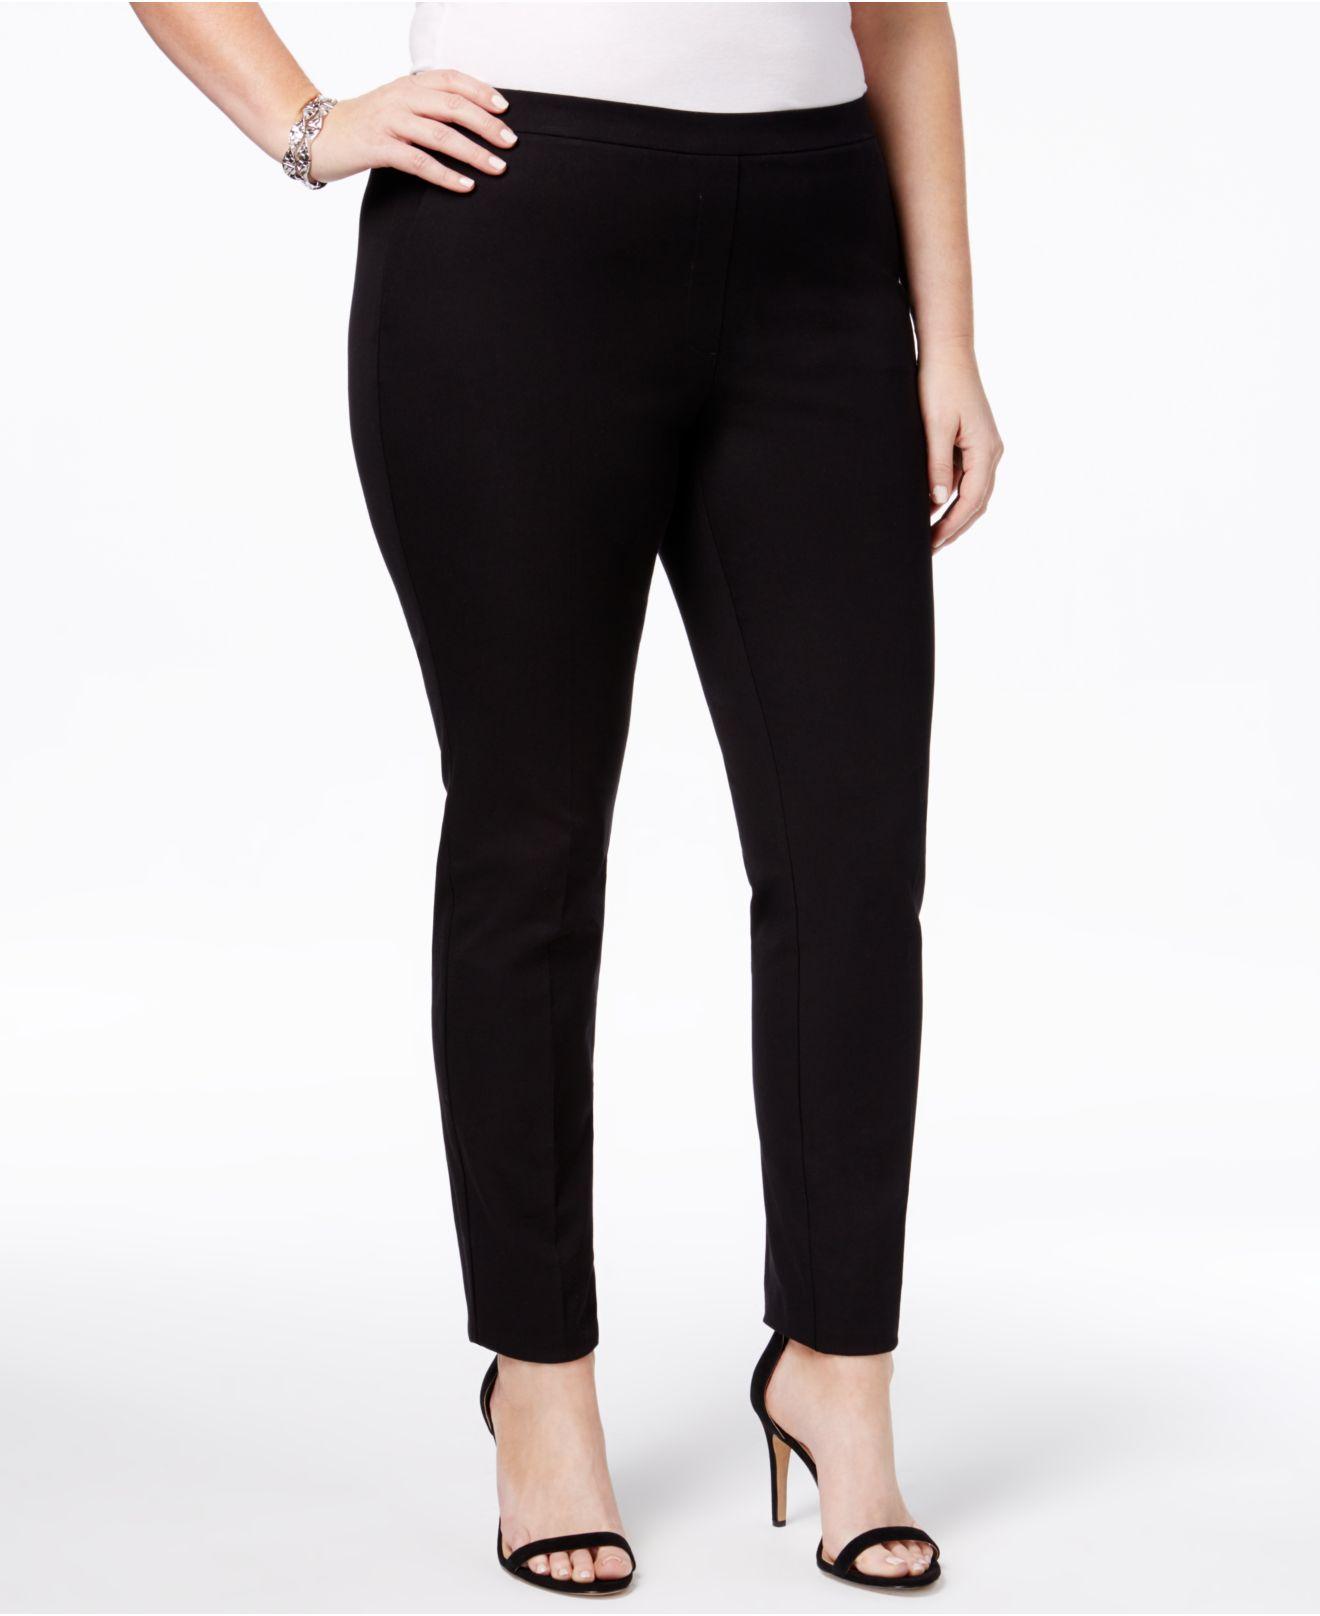 Lyst - Alfani Plus Size Pull-on Skinny Pants in Black